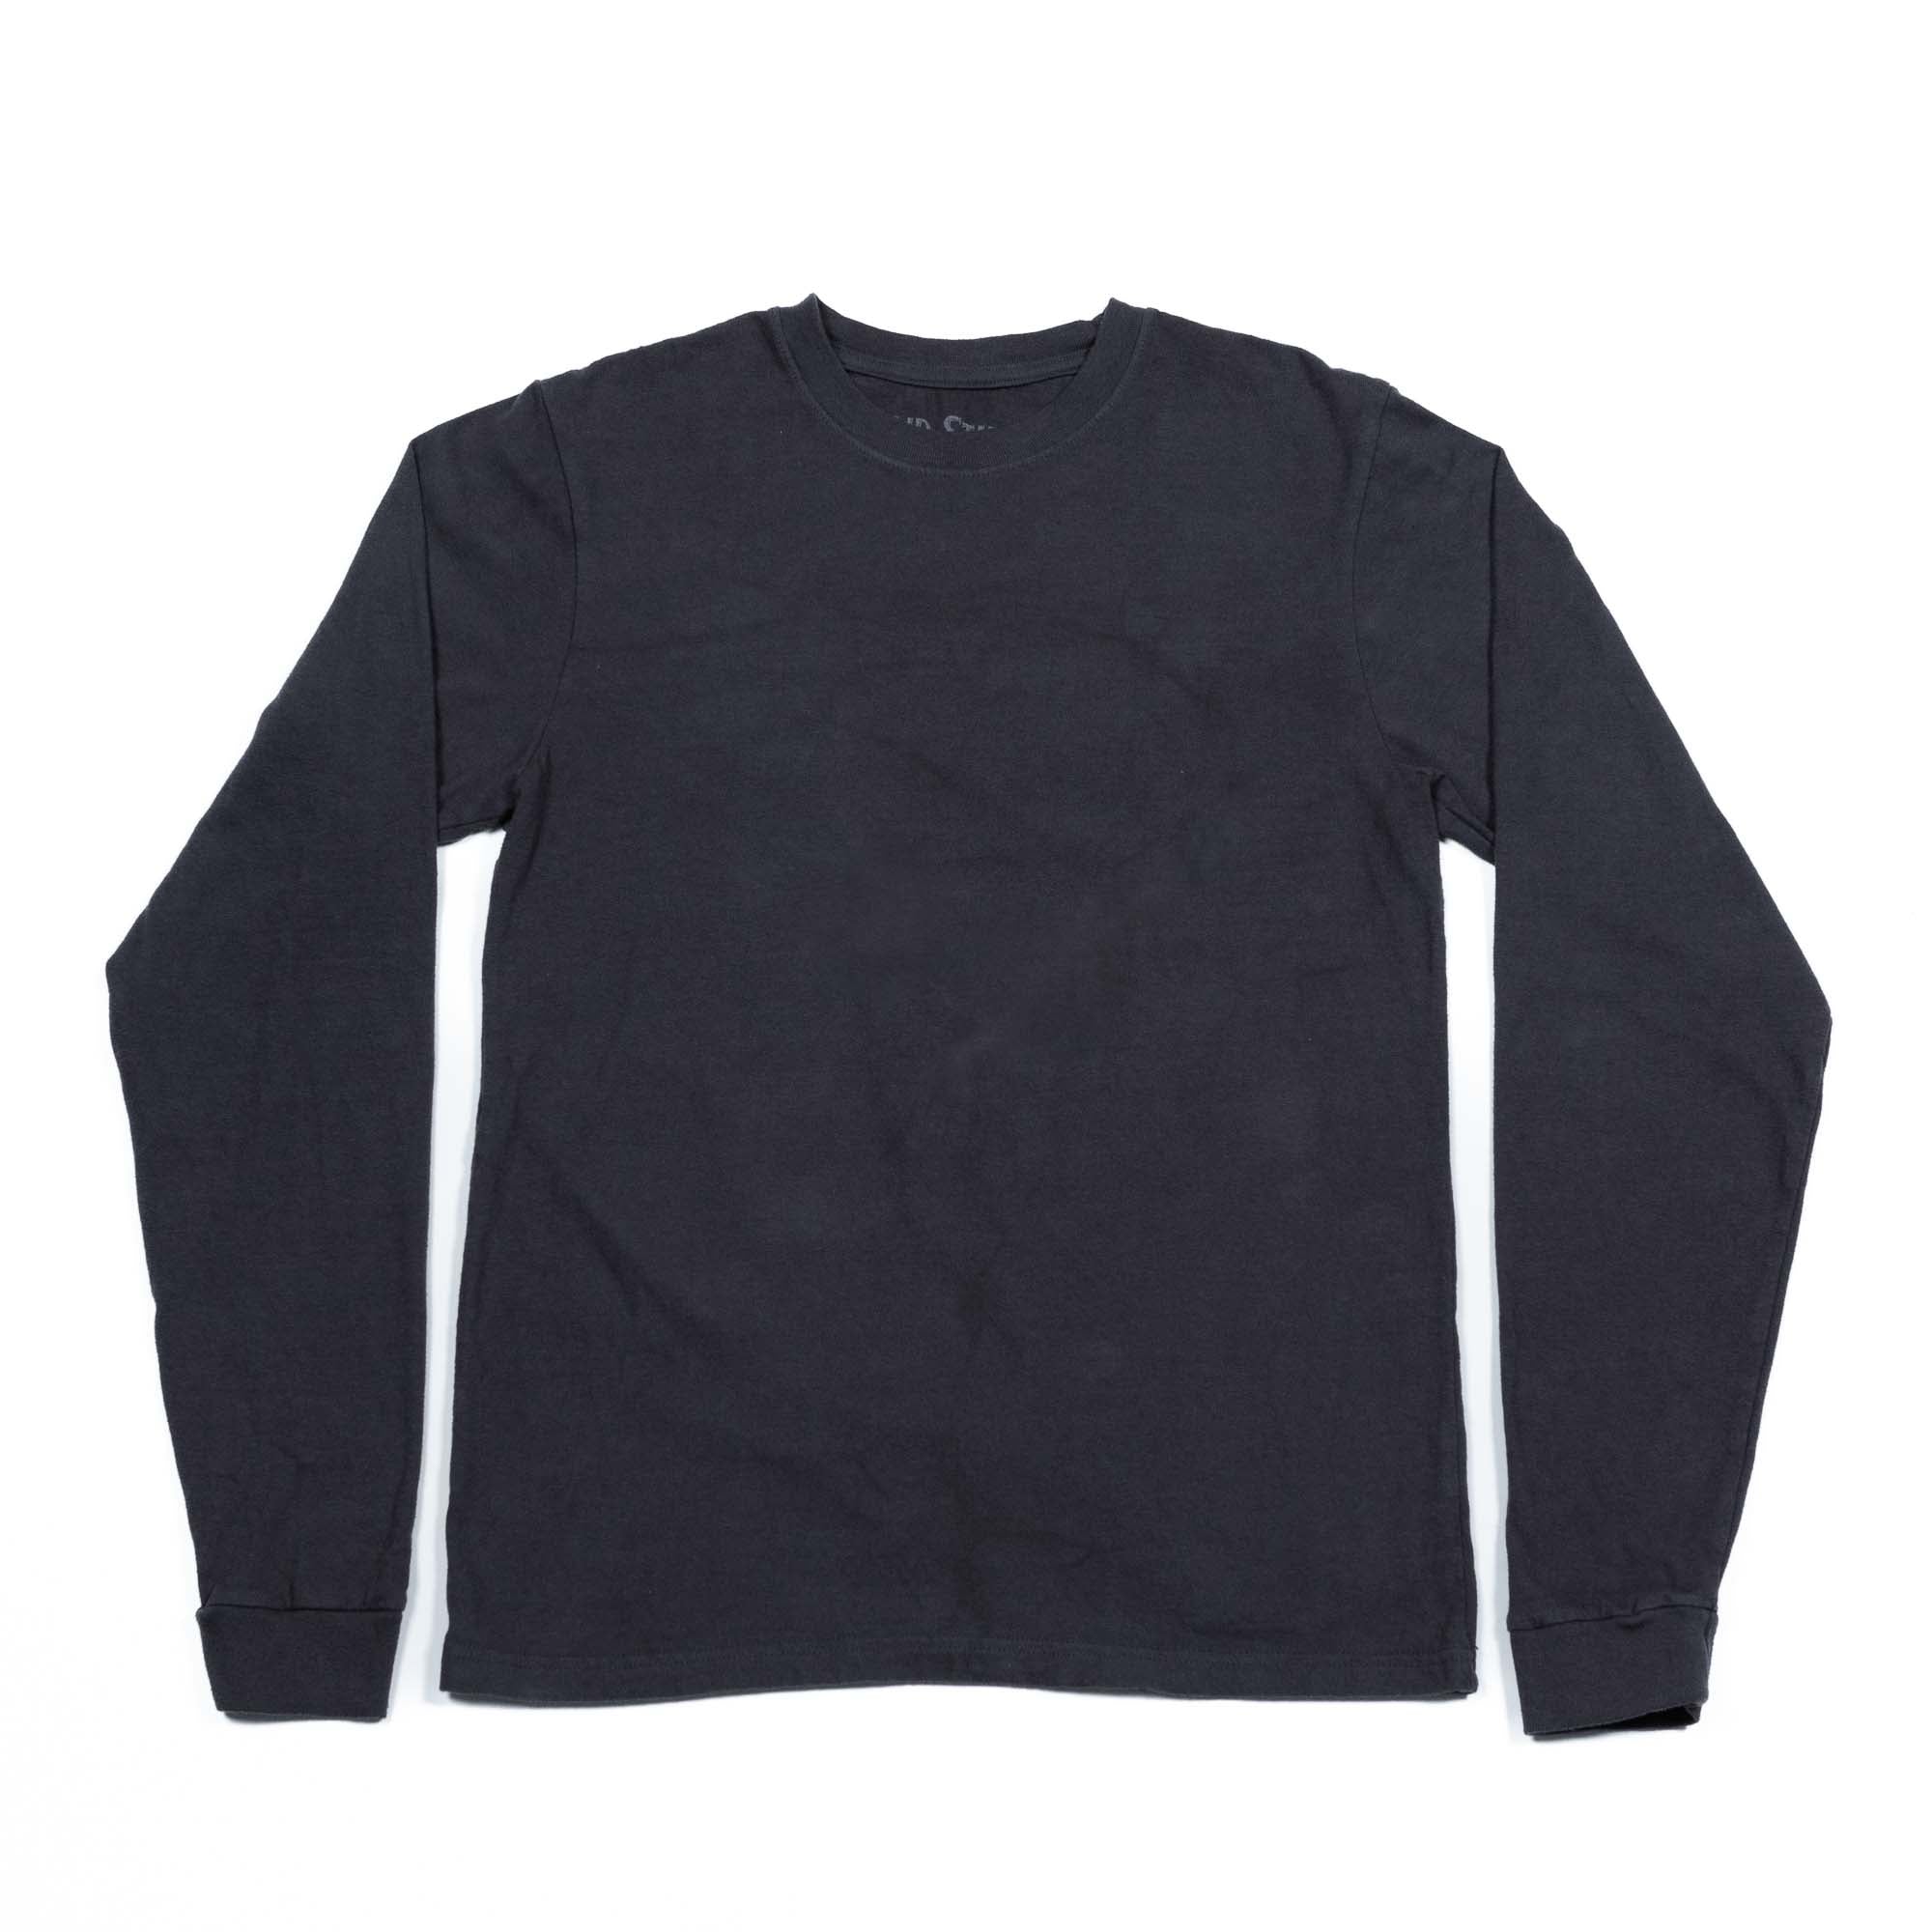 North Carolina Cotton Long Sleeve T-Shirt - True Black